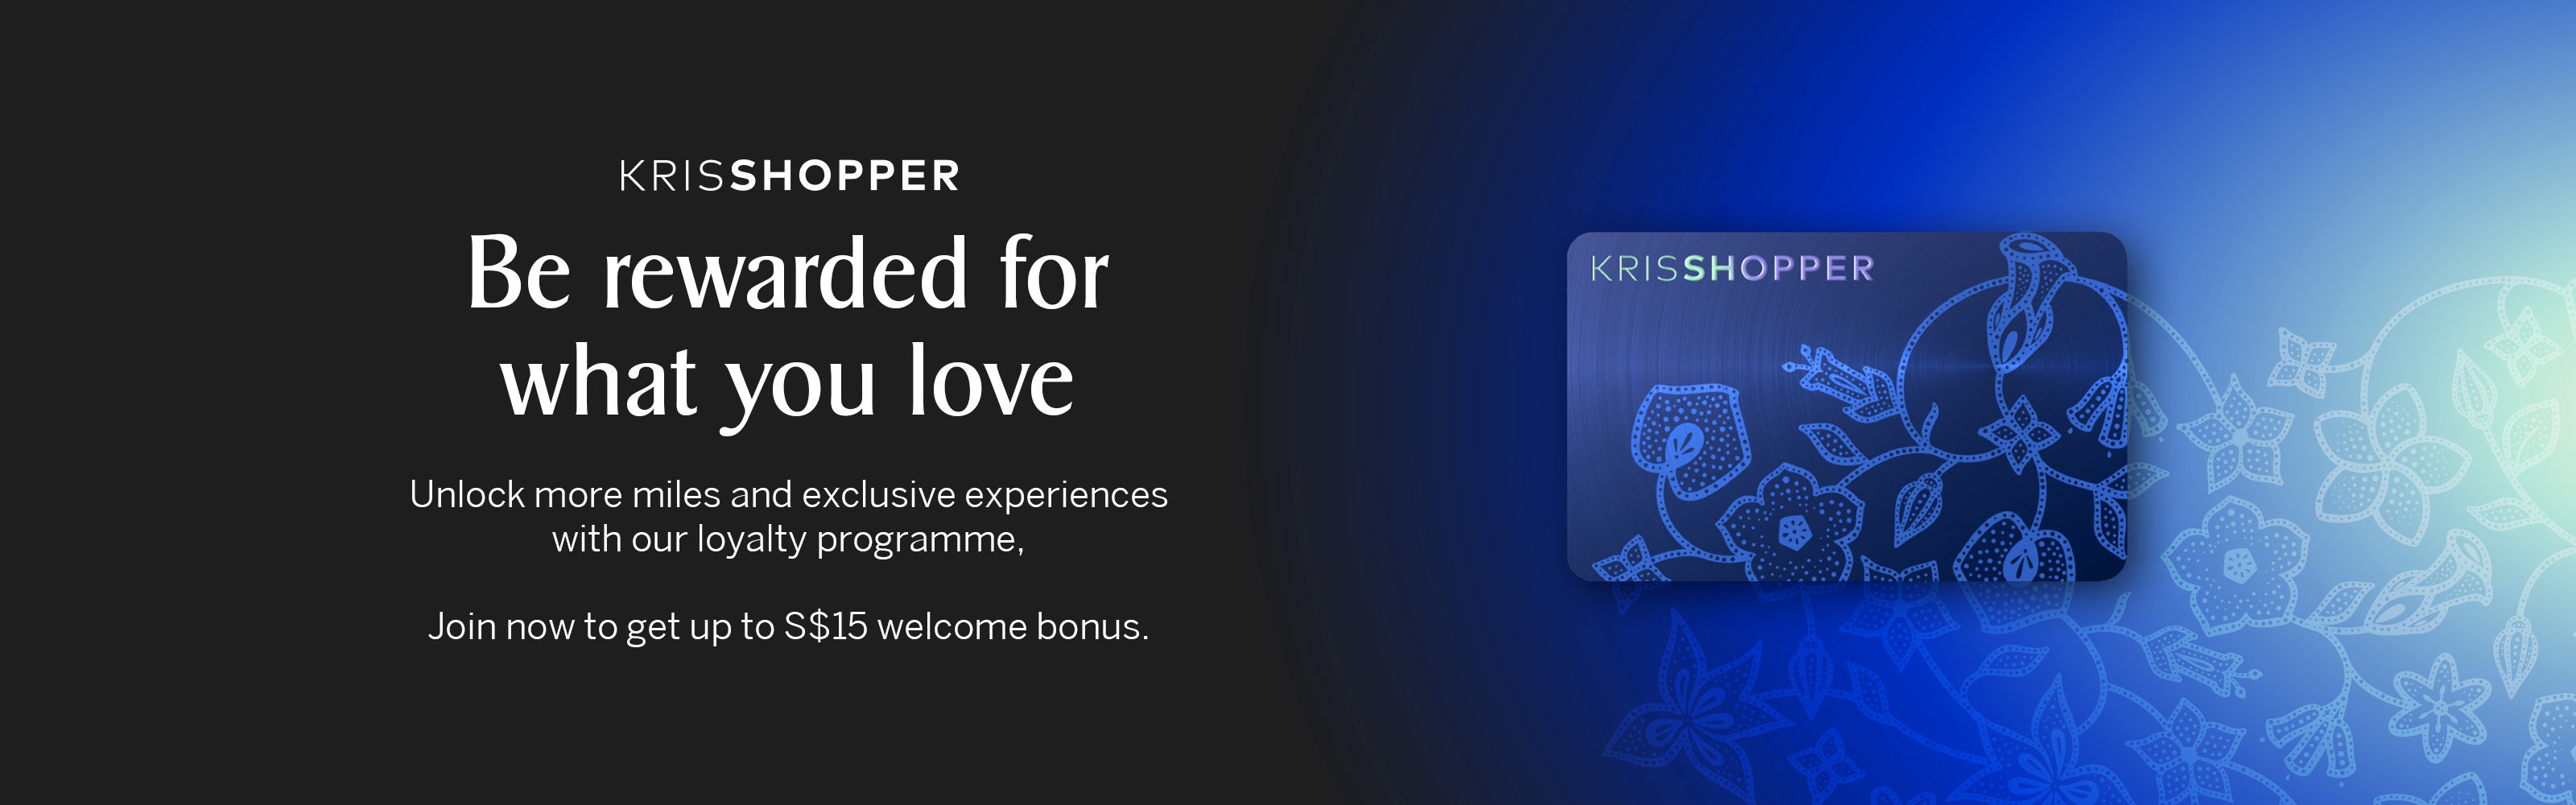 KrisShopper Welcome Bonus: Up to S$15 off promo code